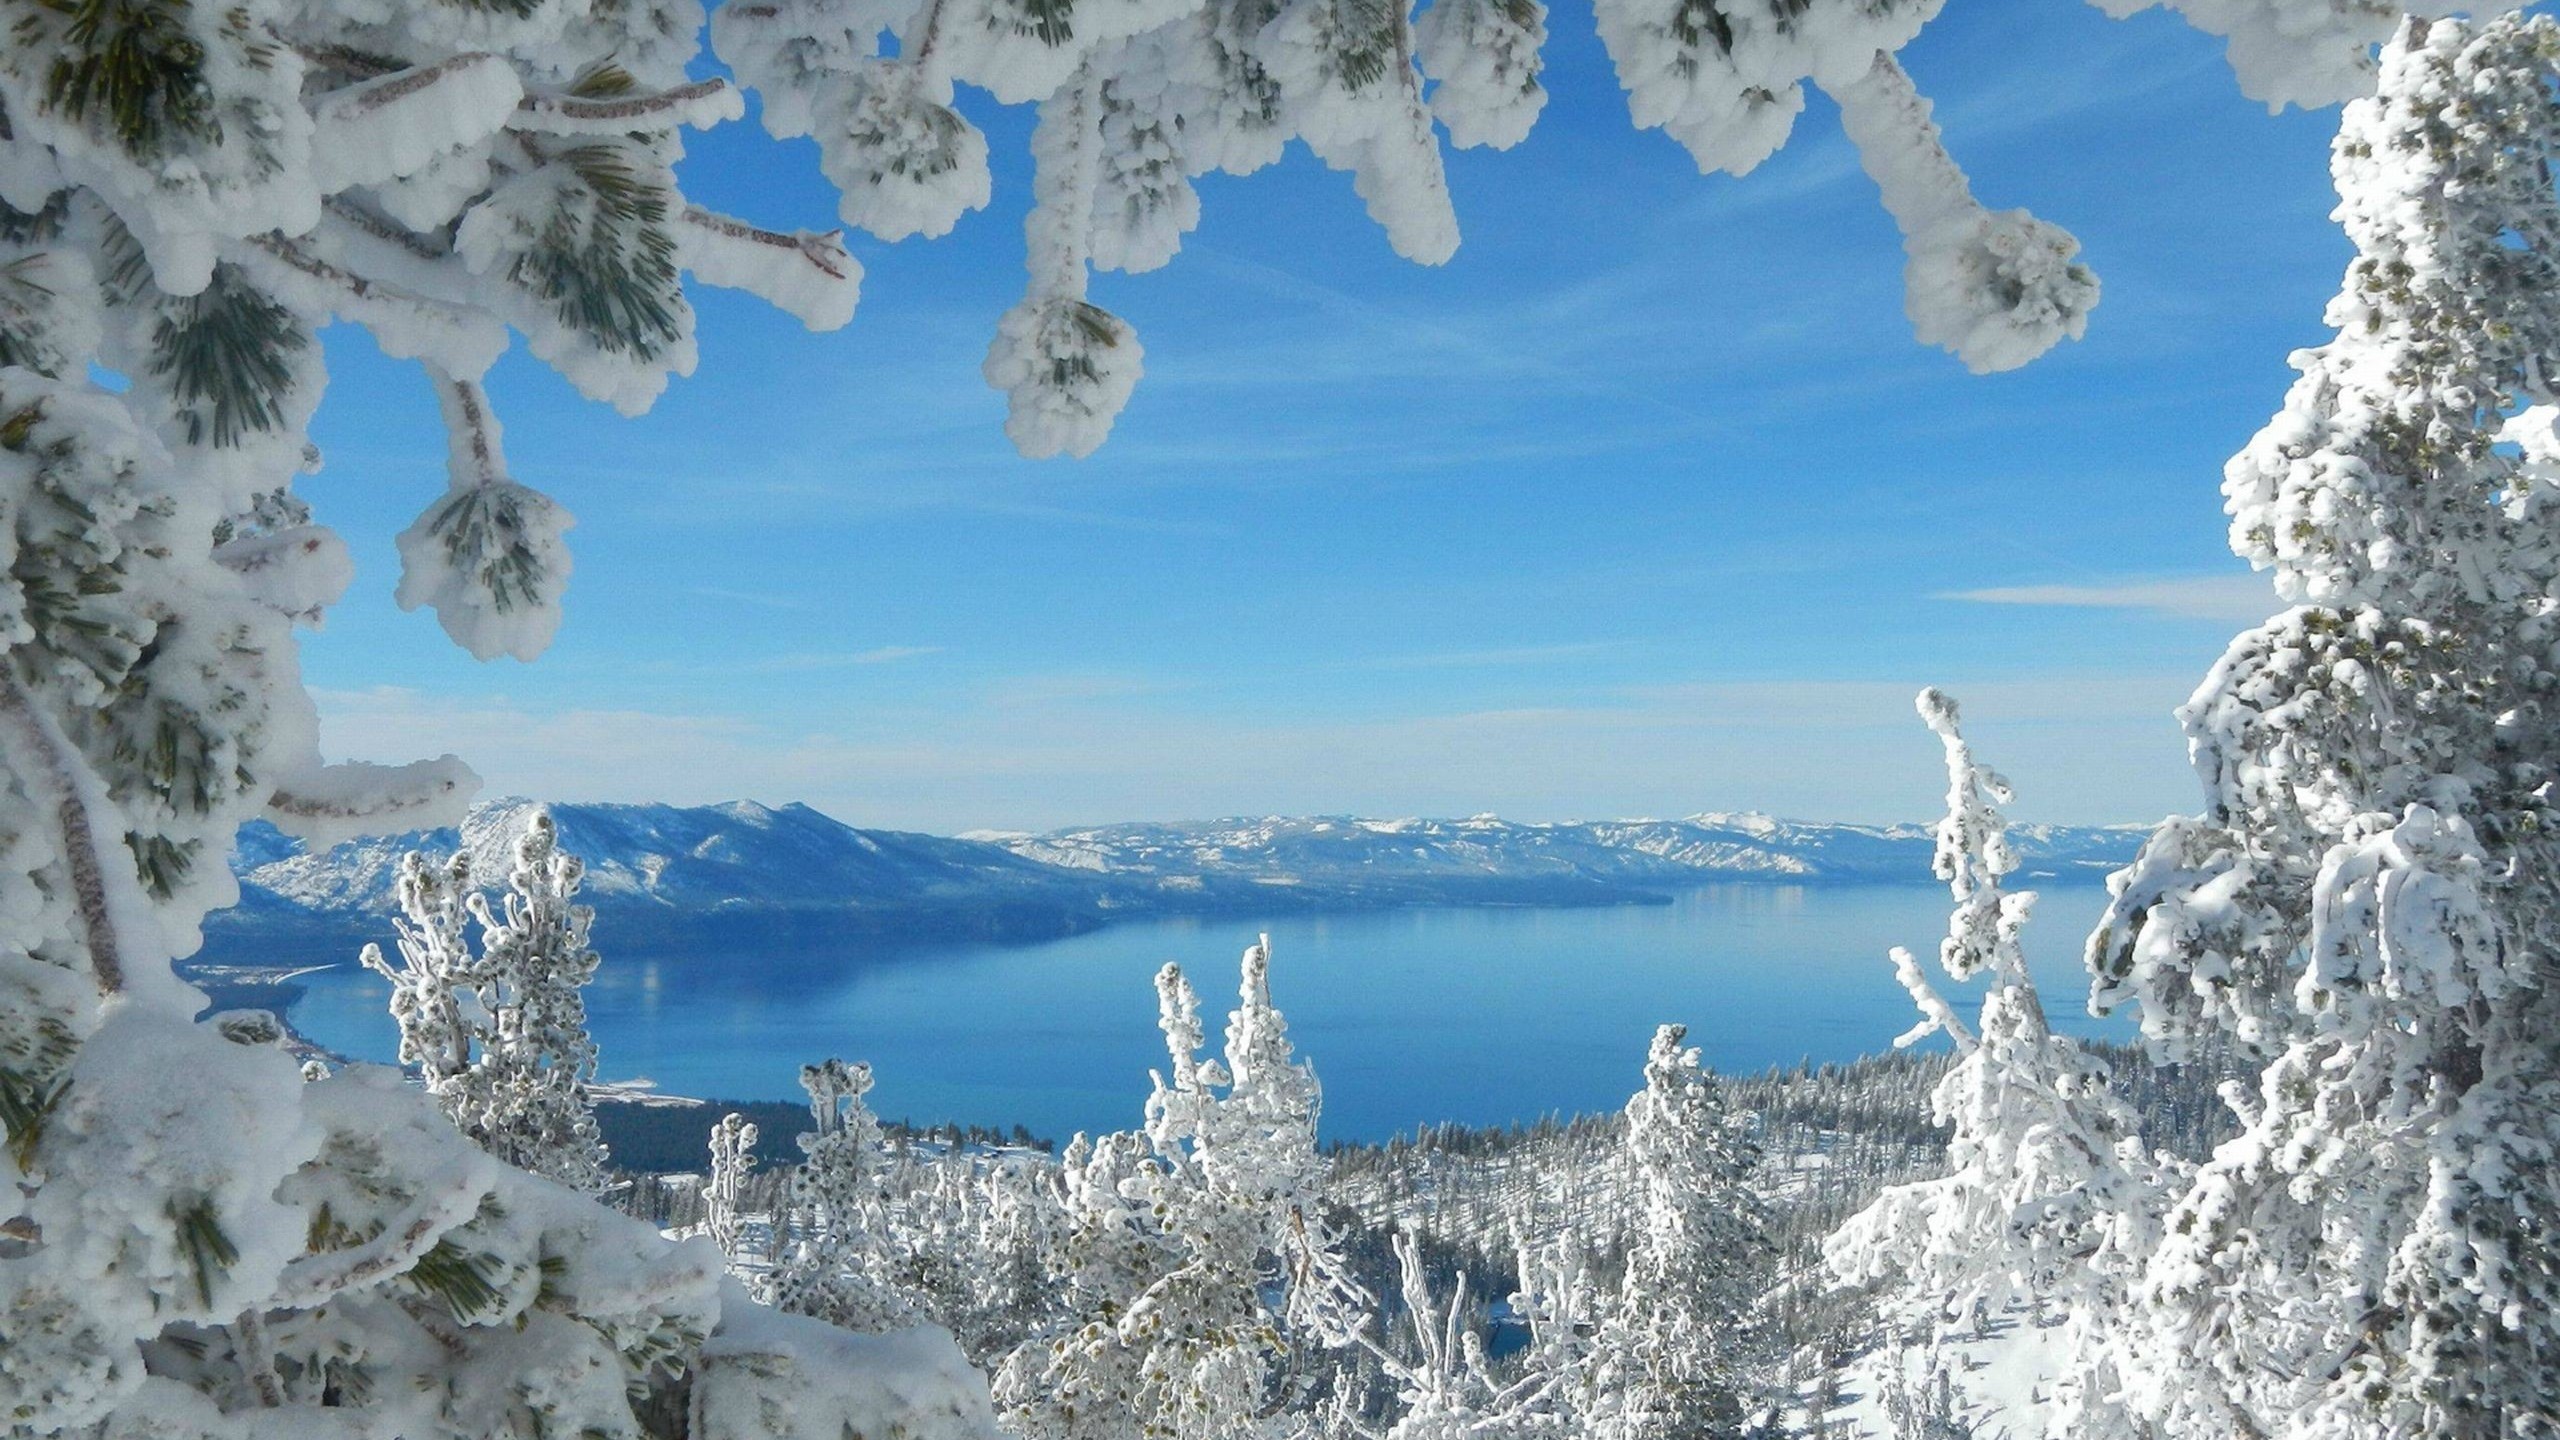 2560x1440 DOWNLOAD WALLPAPER Heavenly Lake Tahoe - FULL SIZE